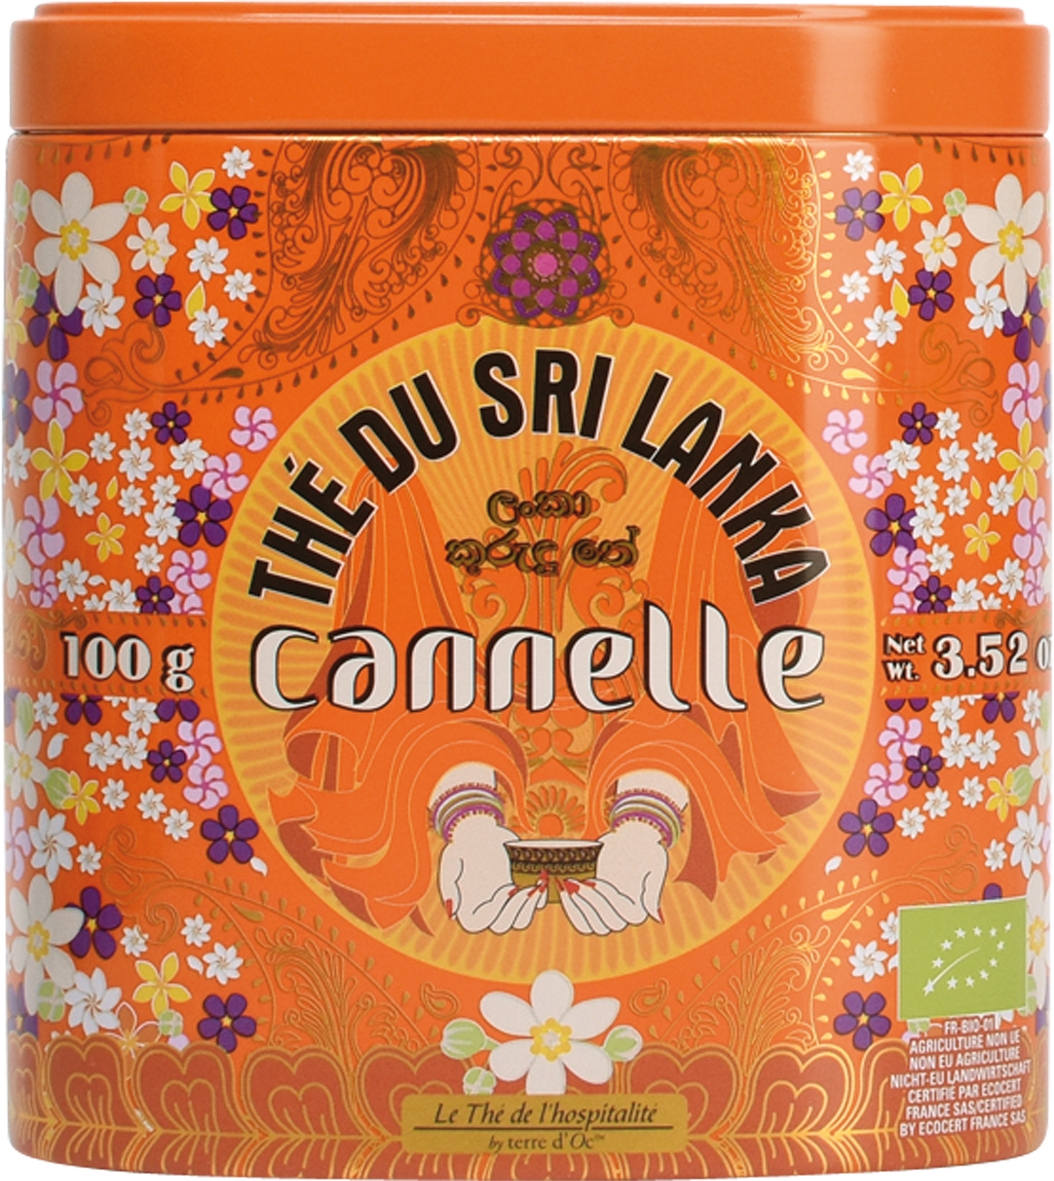 Black tea "Cannelle" - Organic